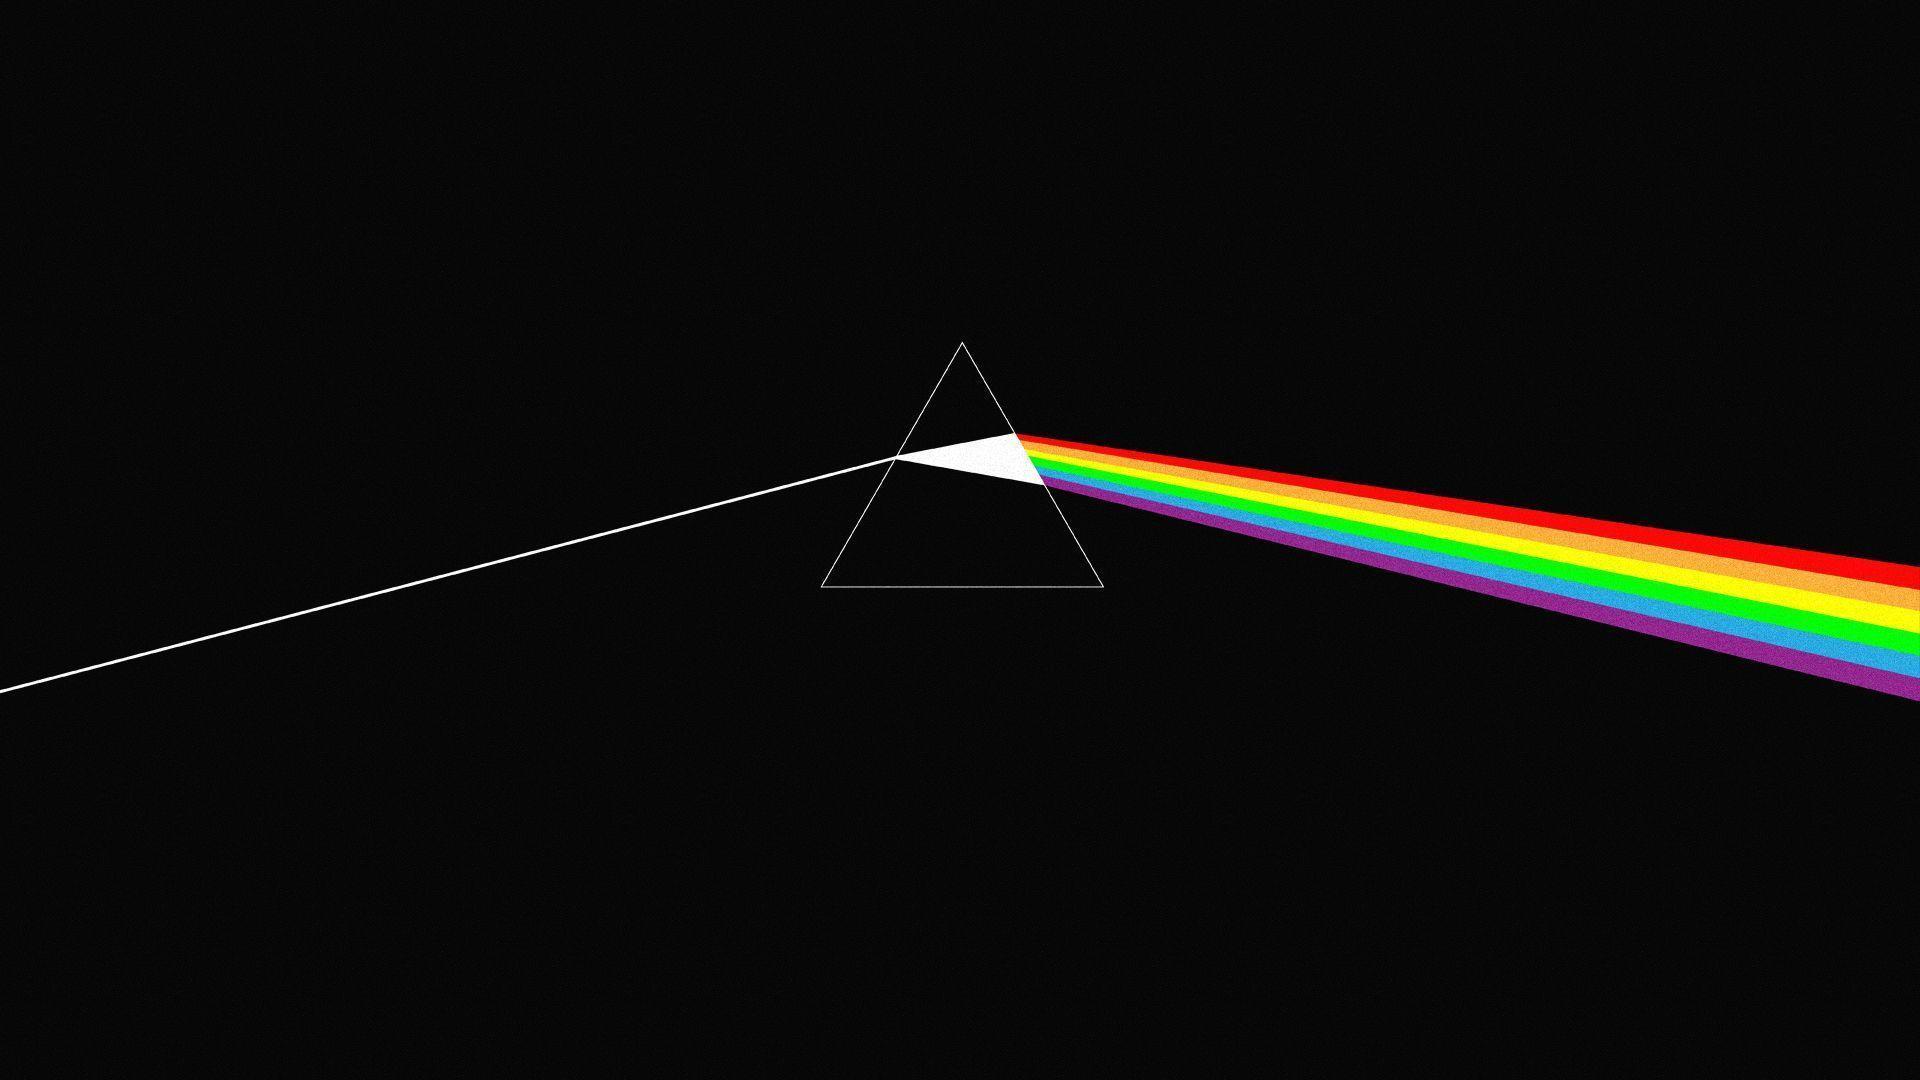 1920 x 1080 · jpeg - Pink Floyd Wallpapers - Wallpaper Cave